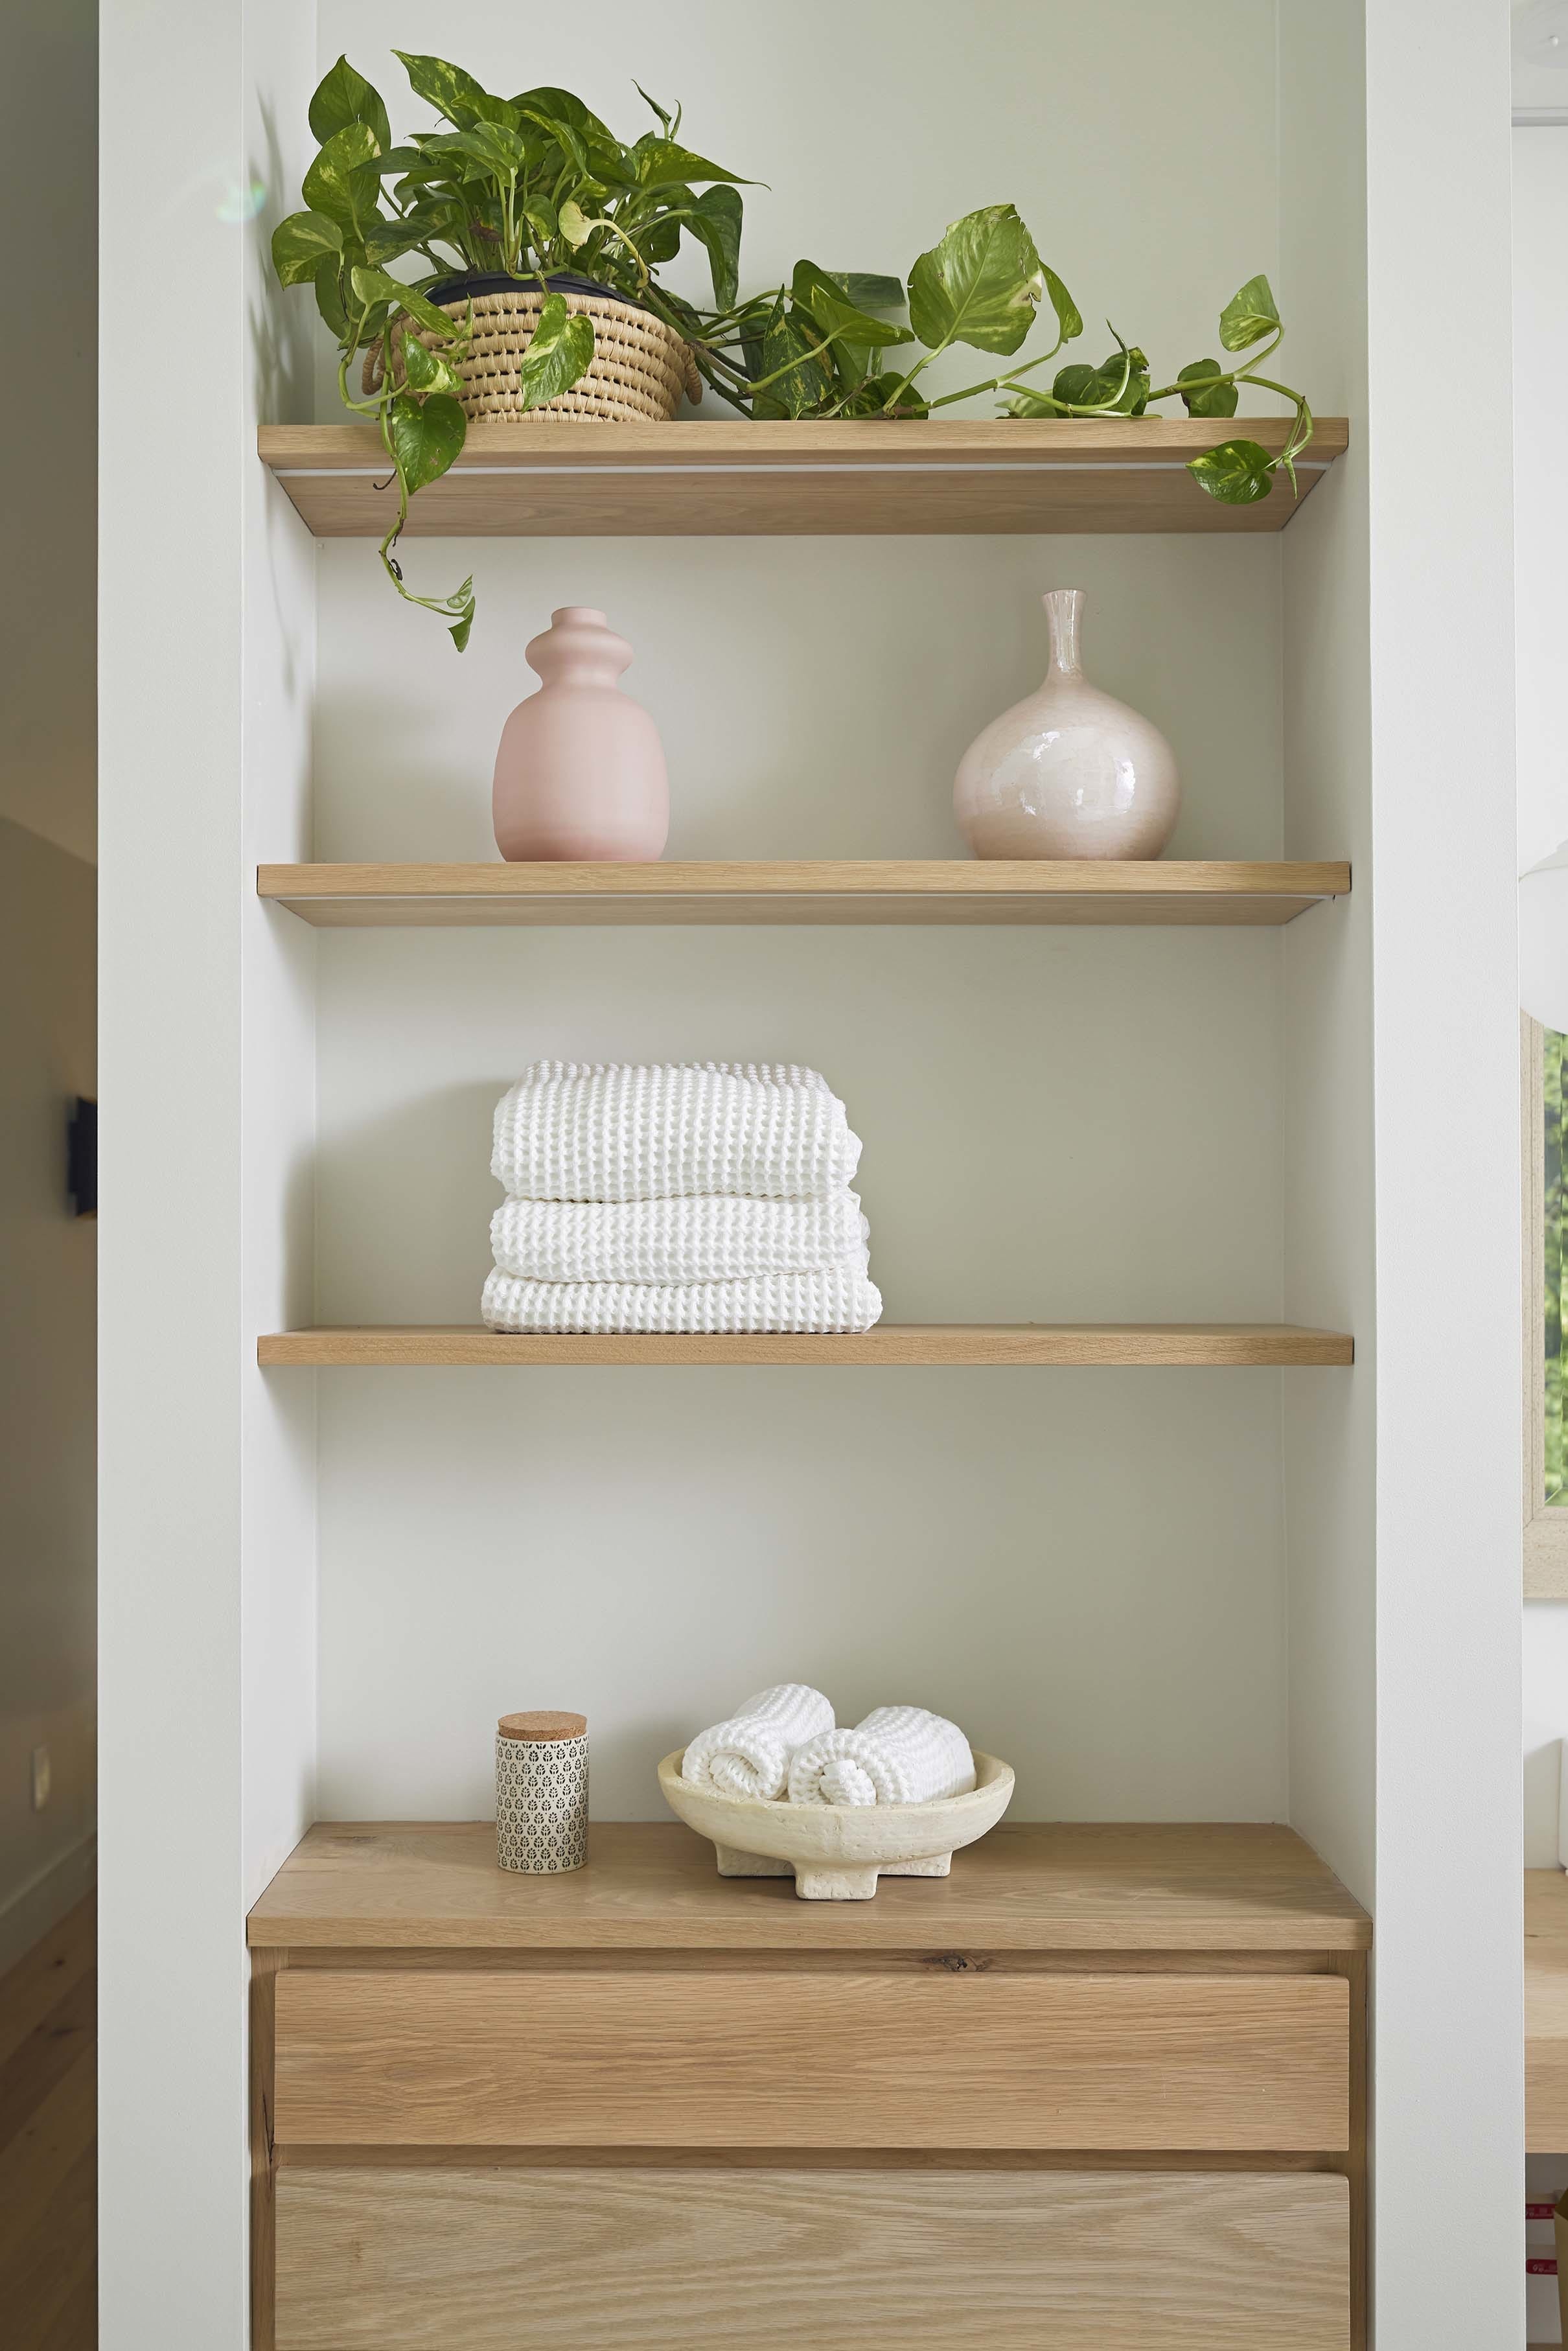 Wooden shelves plant towels vases